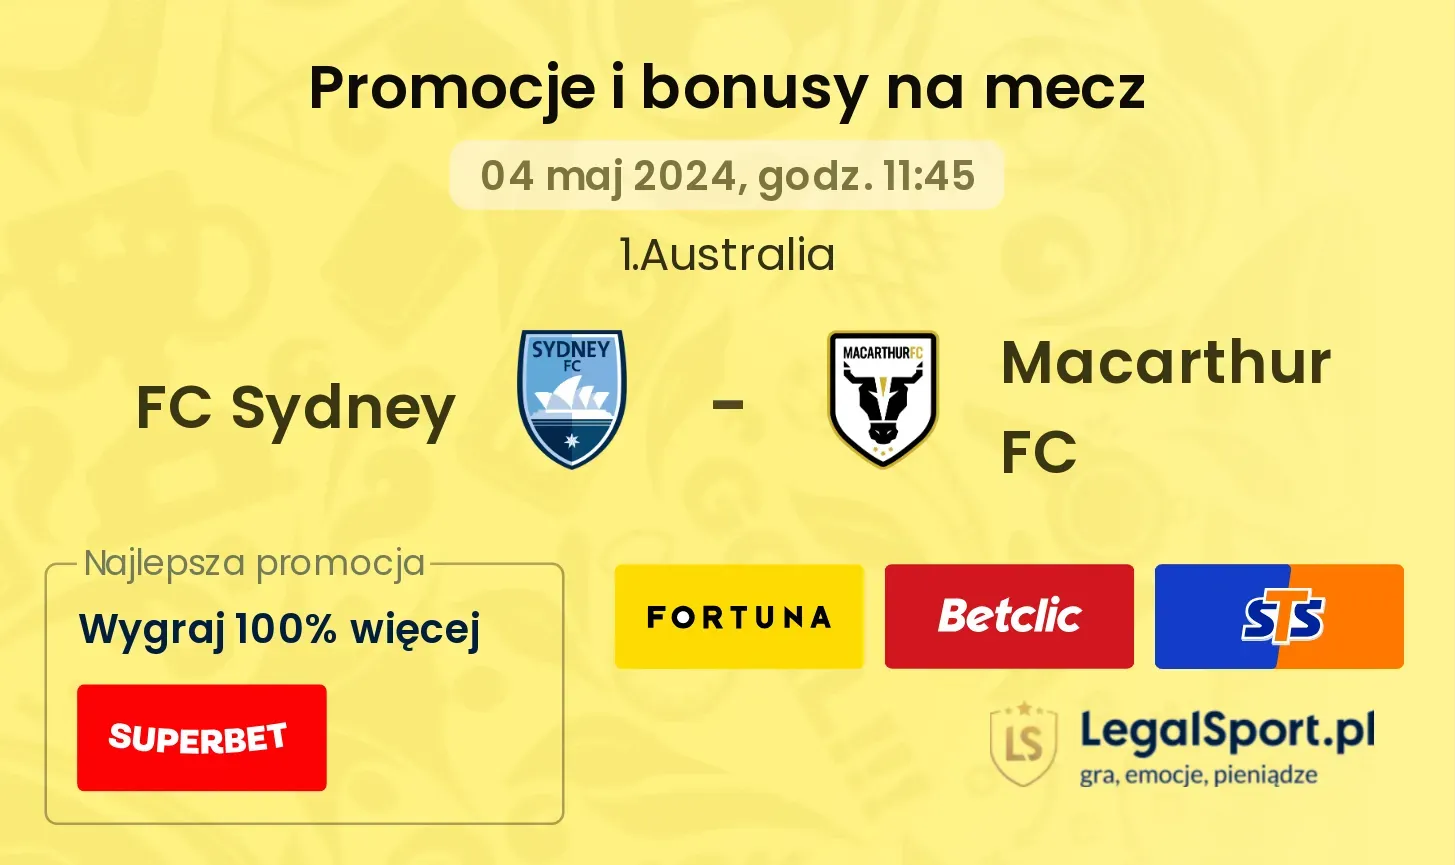 FC Sydney - Macarthur FC promocje bonusy na mecz